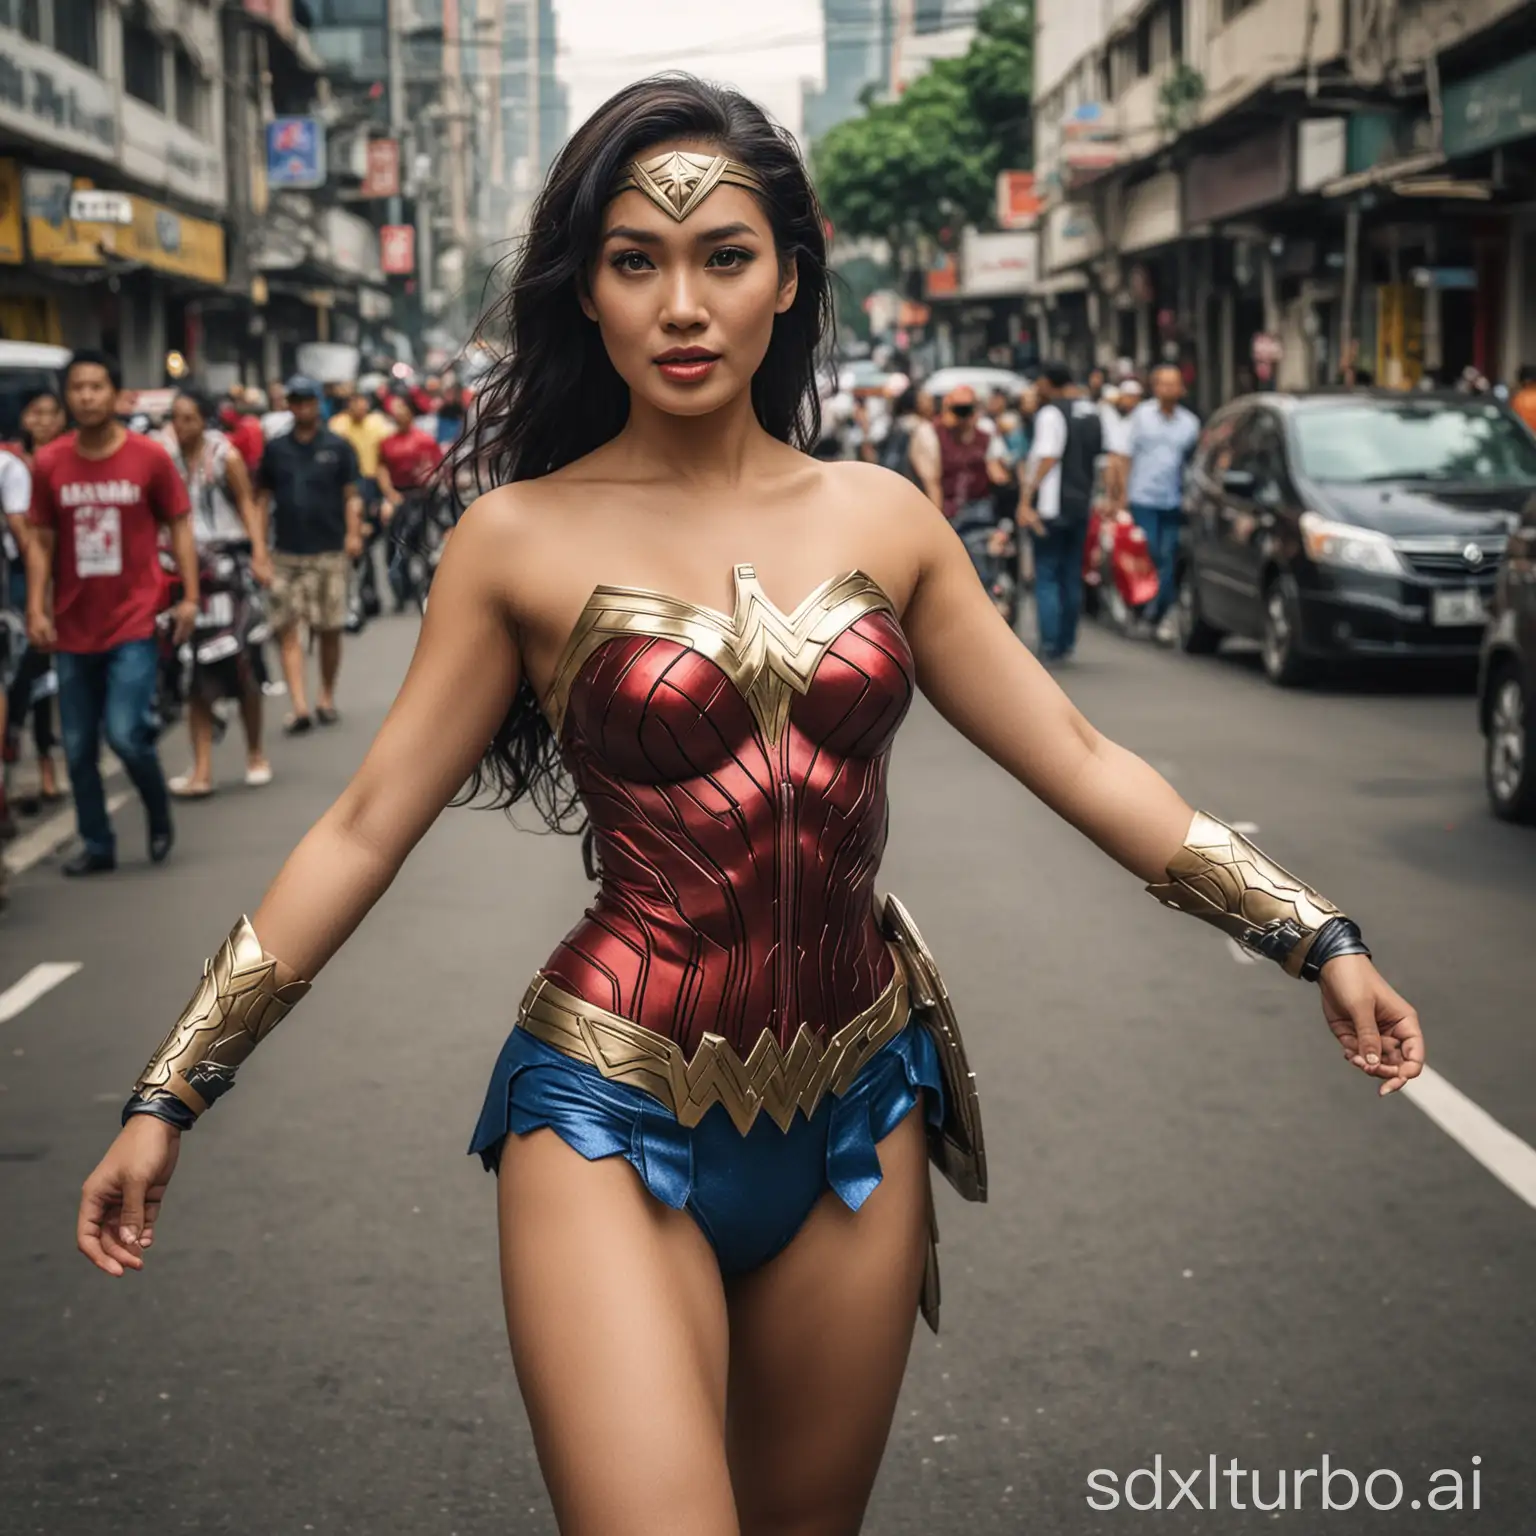 Indonesian-Woman-in-Wonder-Woman-Costume-on-Jakarta-Streets